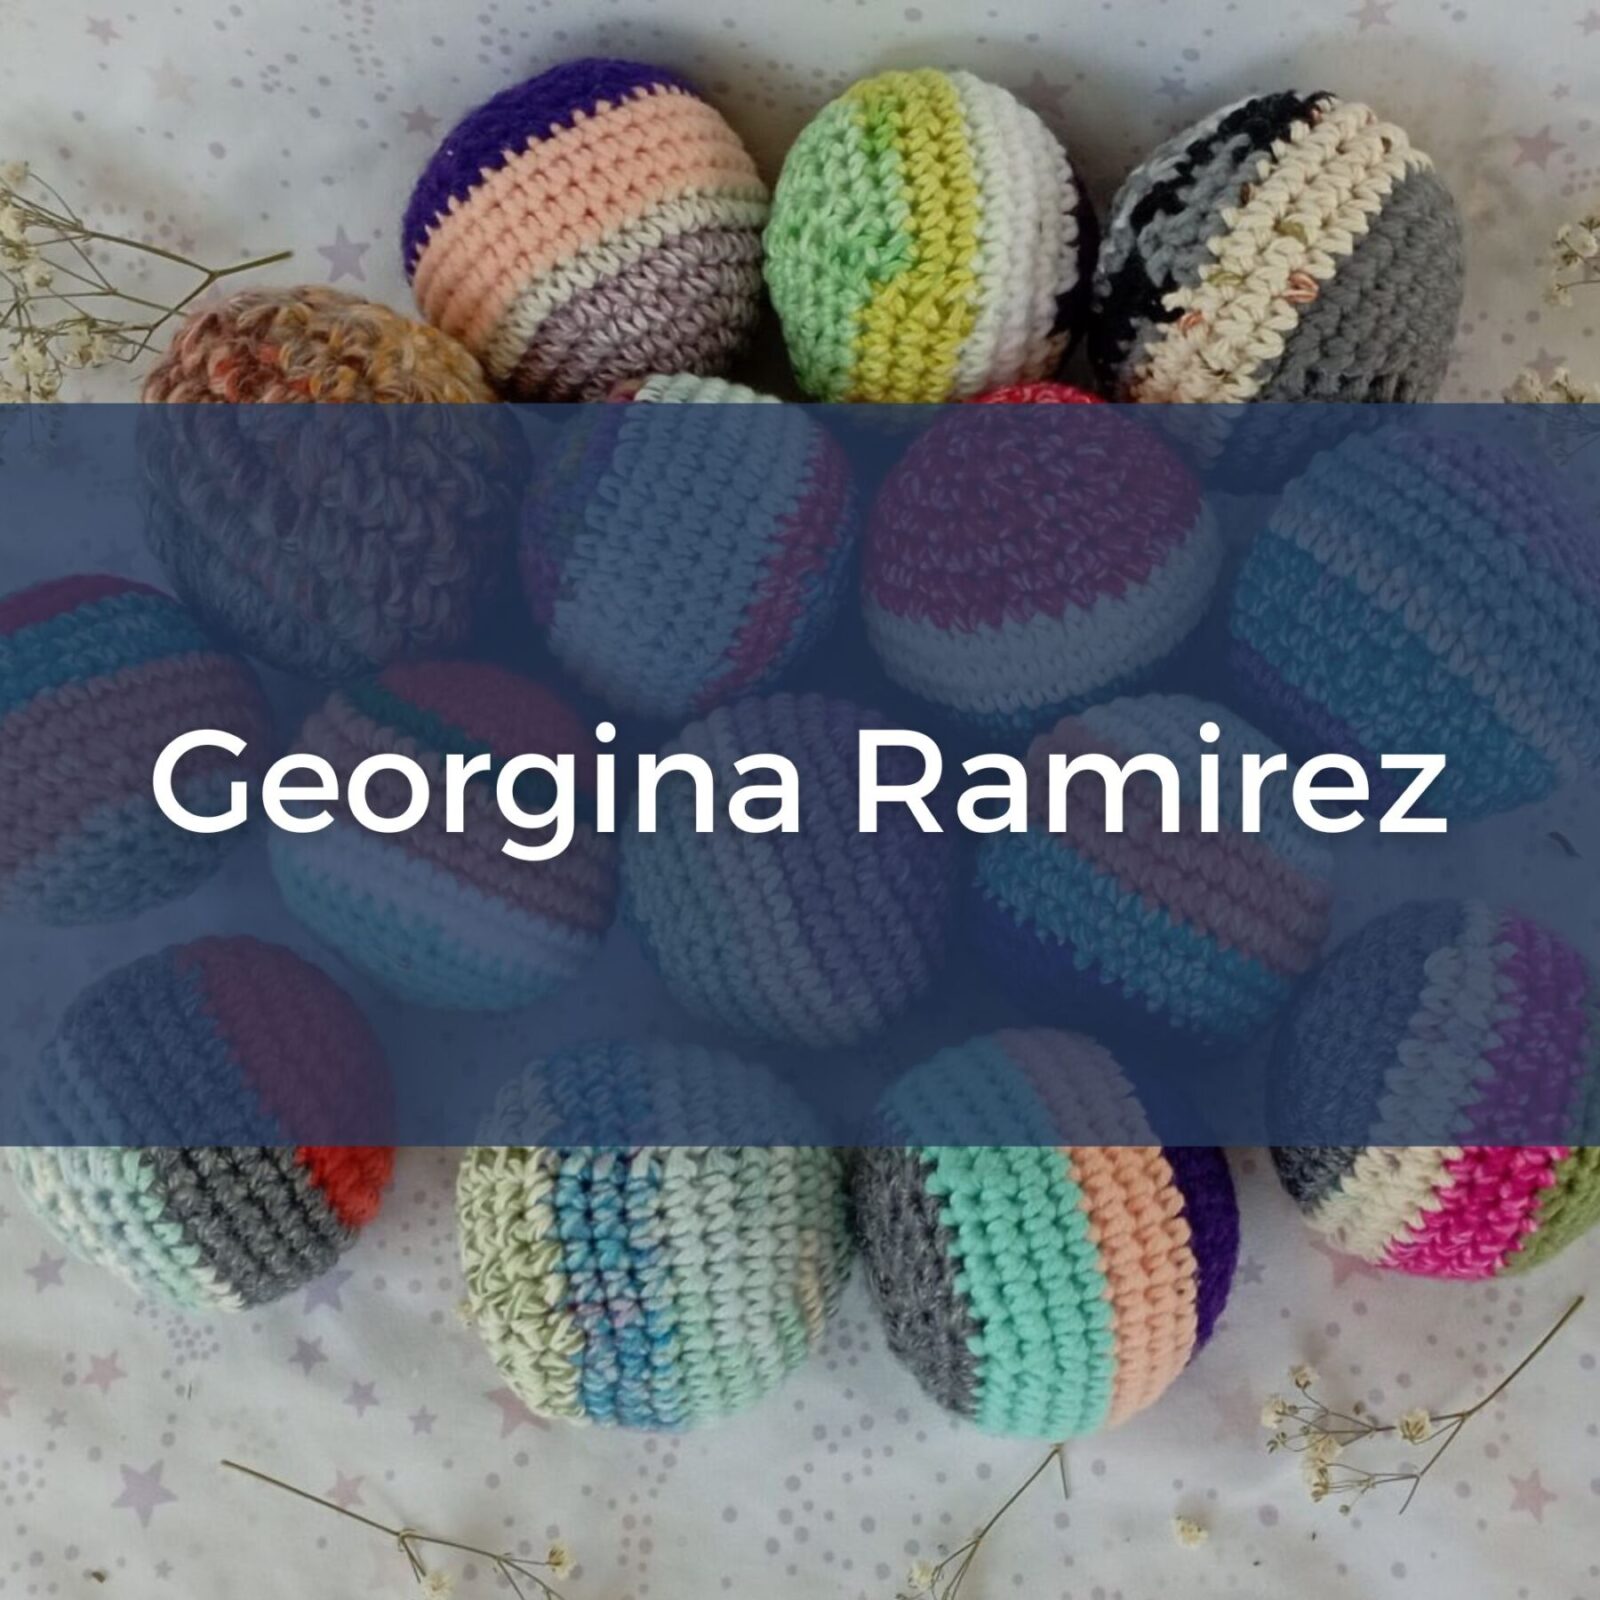 Georgina Ramirez, fiber